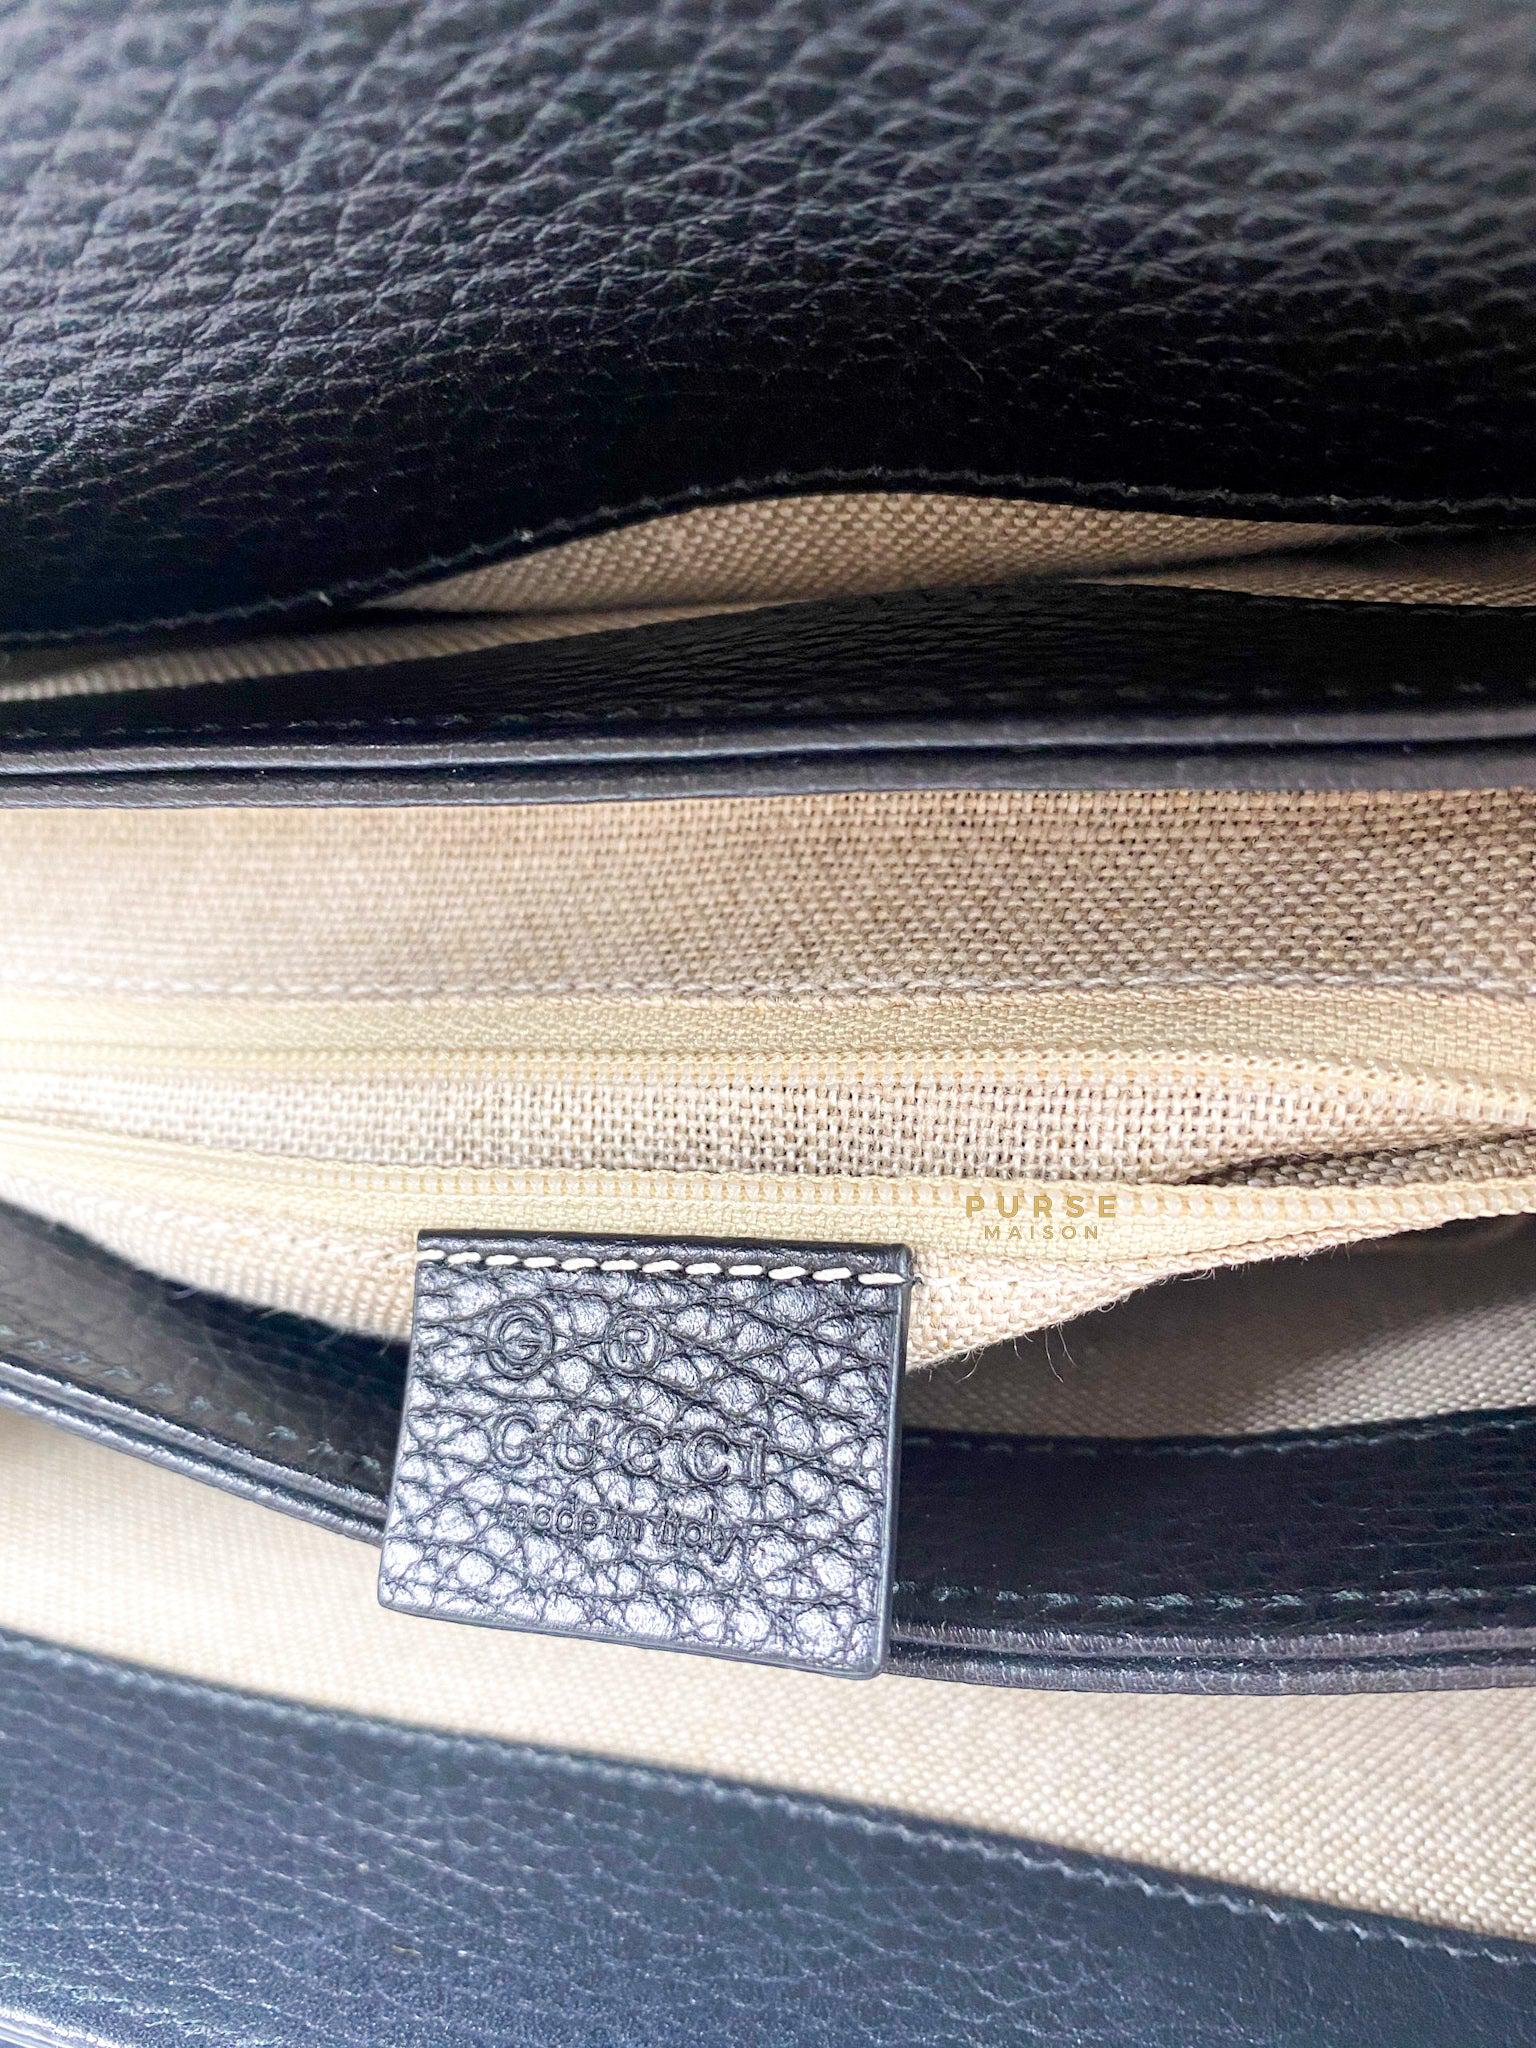 Gucci Black Interlocking Leather Bag